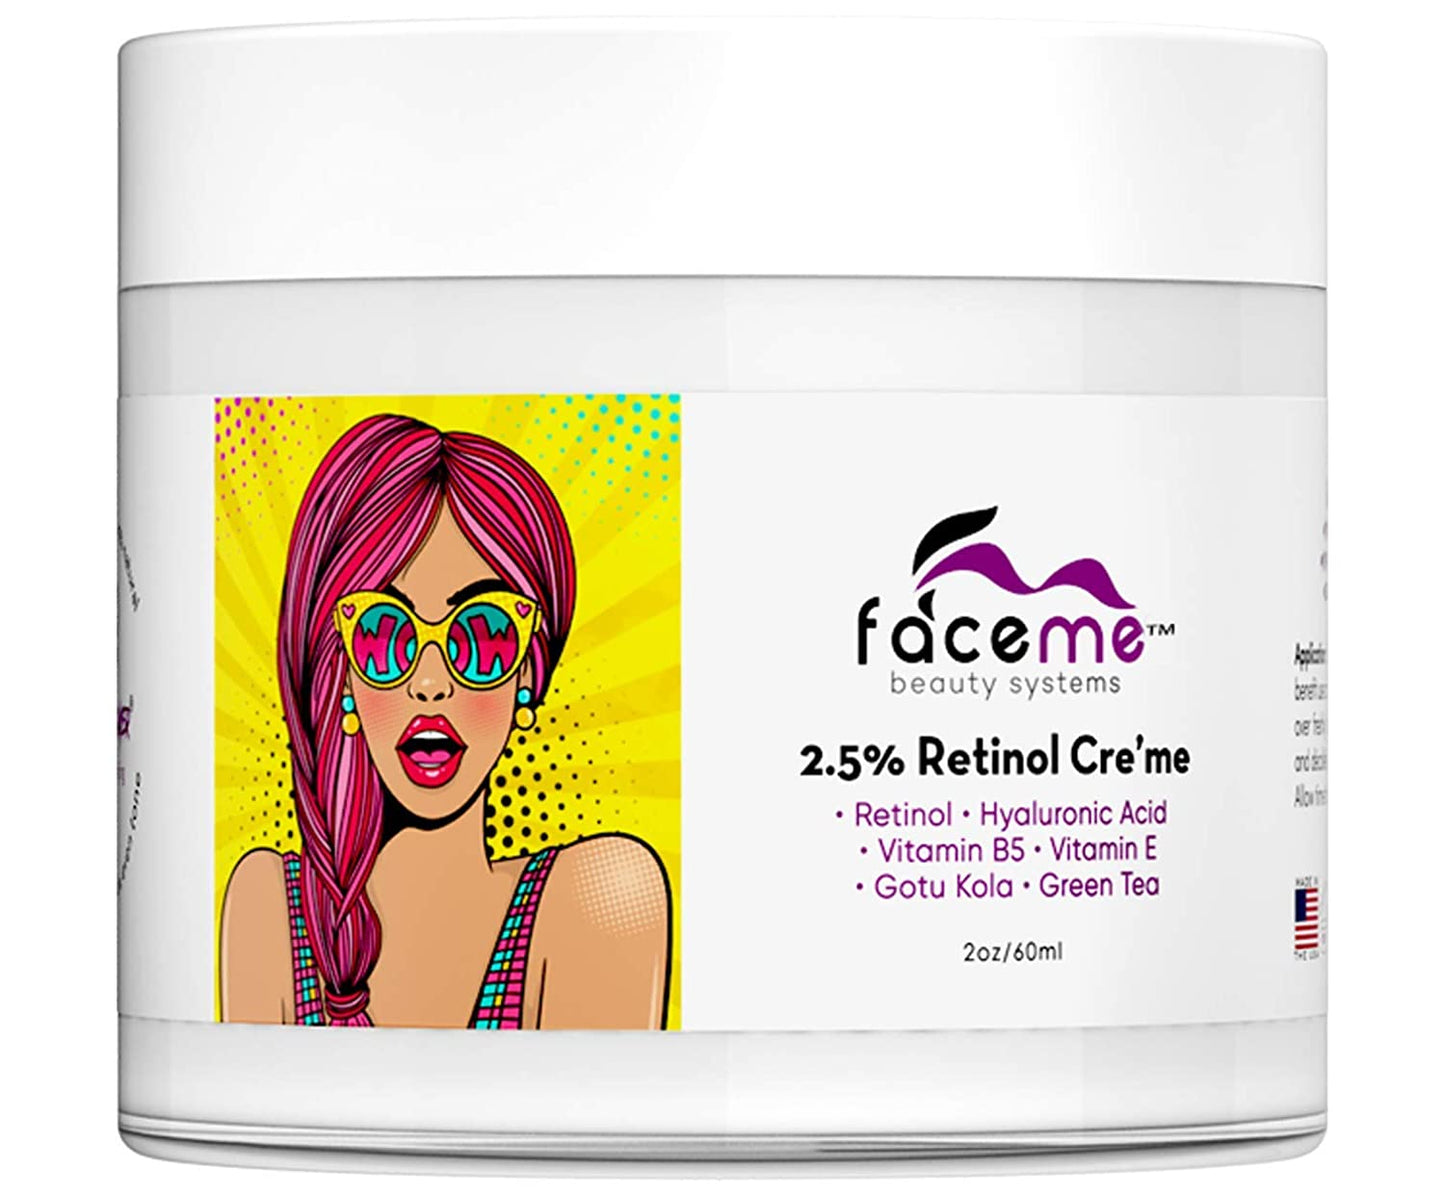 FACEME 2.5% Retinol Cream, Anti-Aging + Youth Promoting, Antioxidants & Botanicals- Hydrate, Renew, Smooth, Firm, Tone, Boost Collagen. Retinol, Aloe Vera, Hyaluronic Acid, Green Tea & more! 2fl oz.